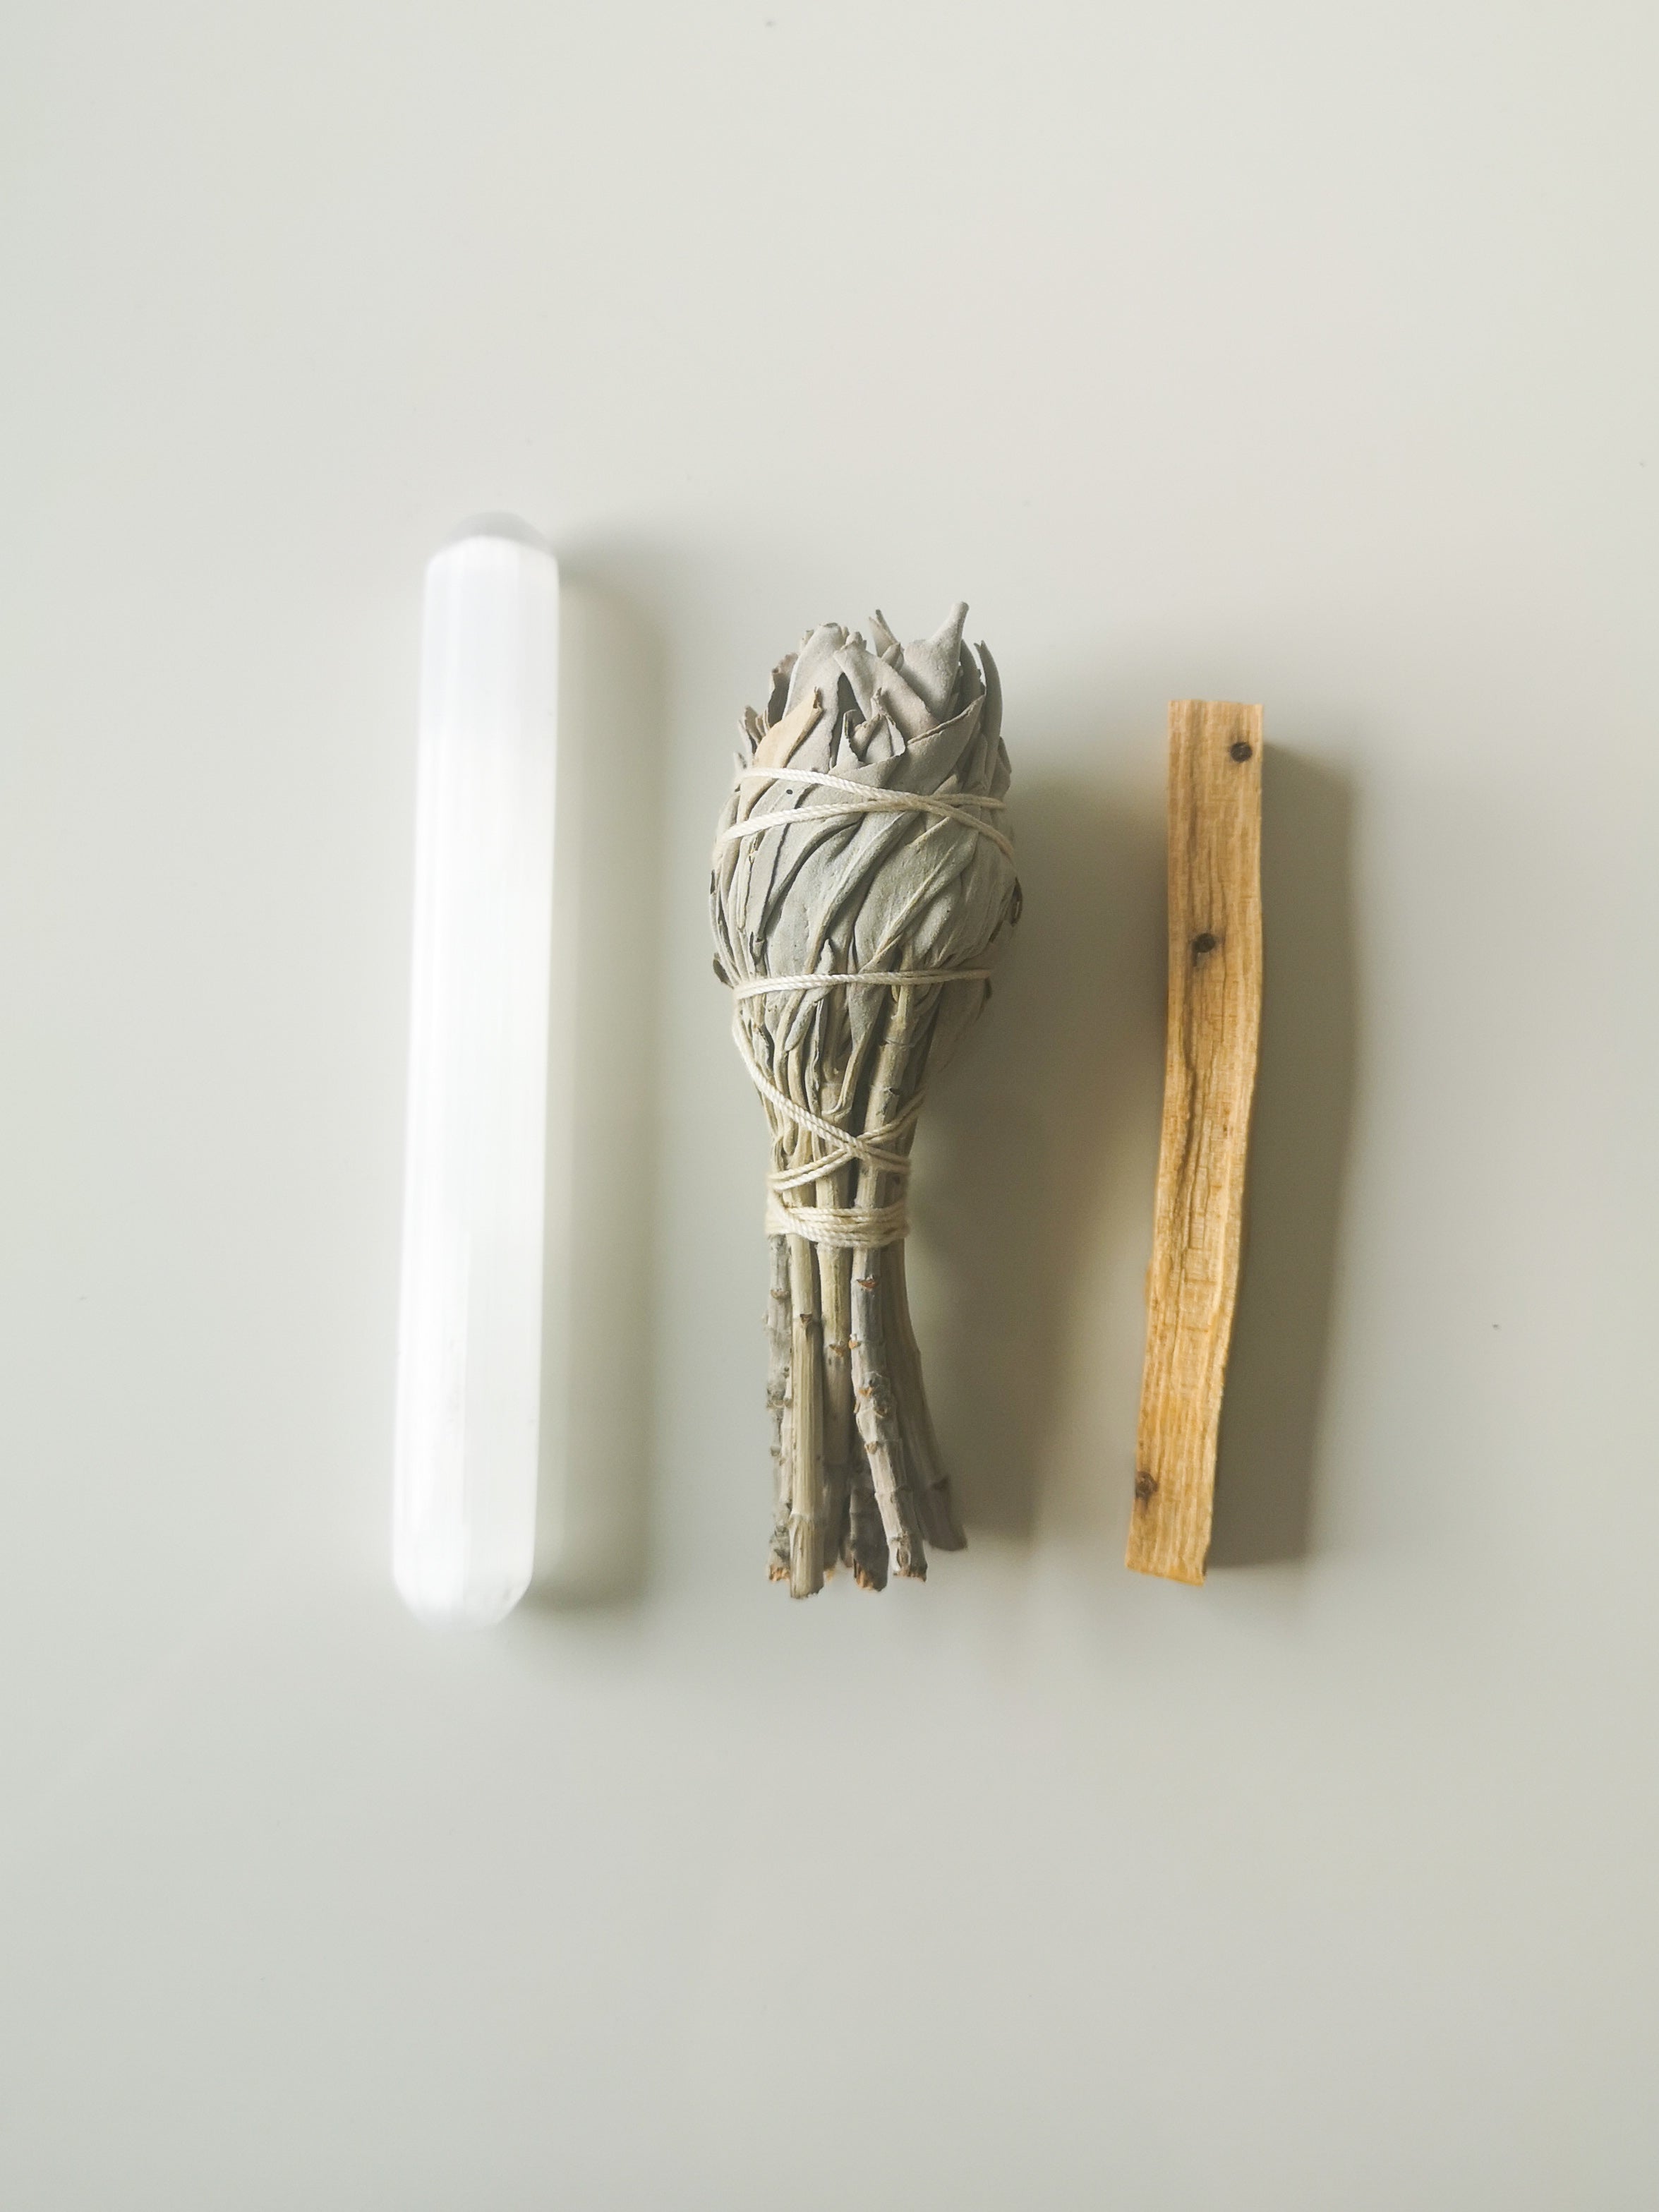 Ritual kit - selentite crystal wand, sage, palo santo